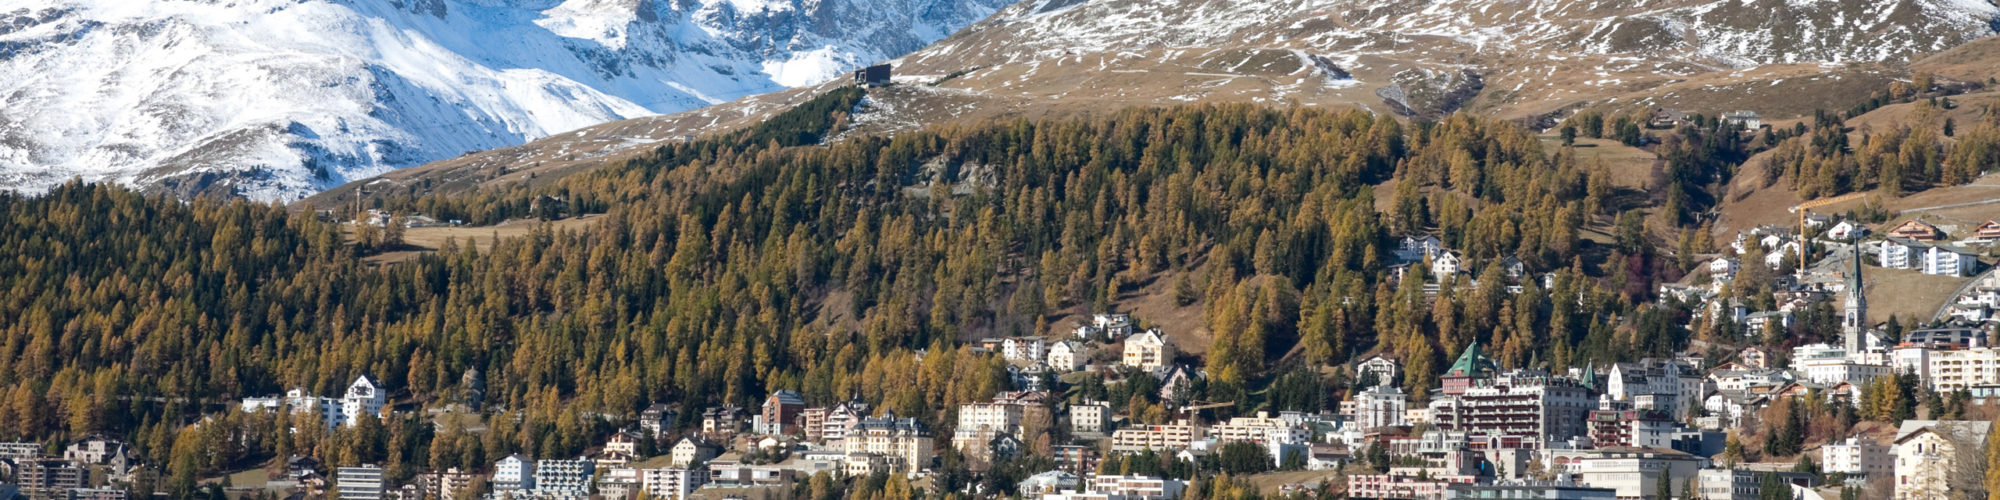 St Moritz travel agents packages deals